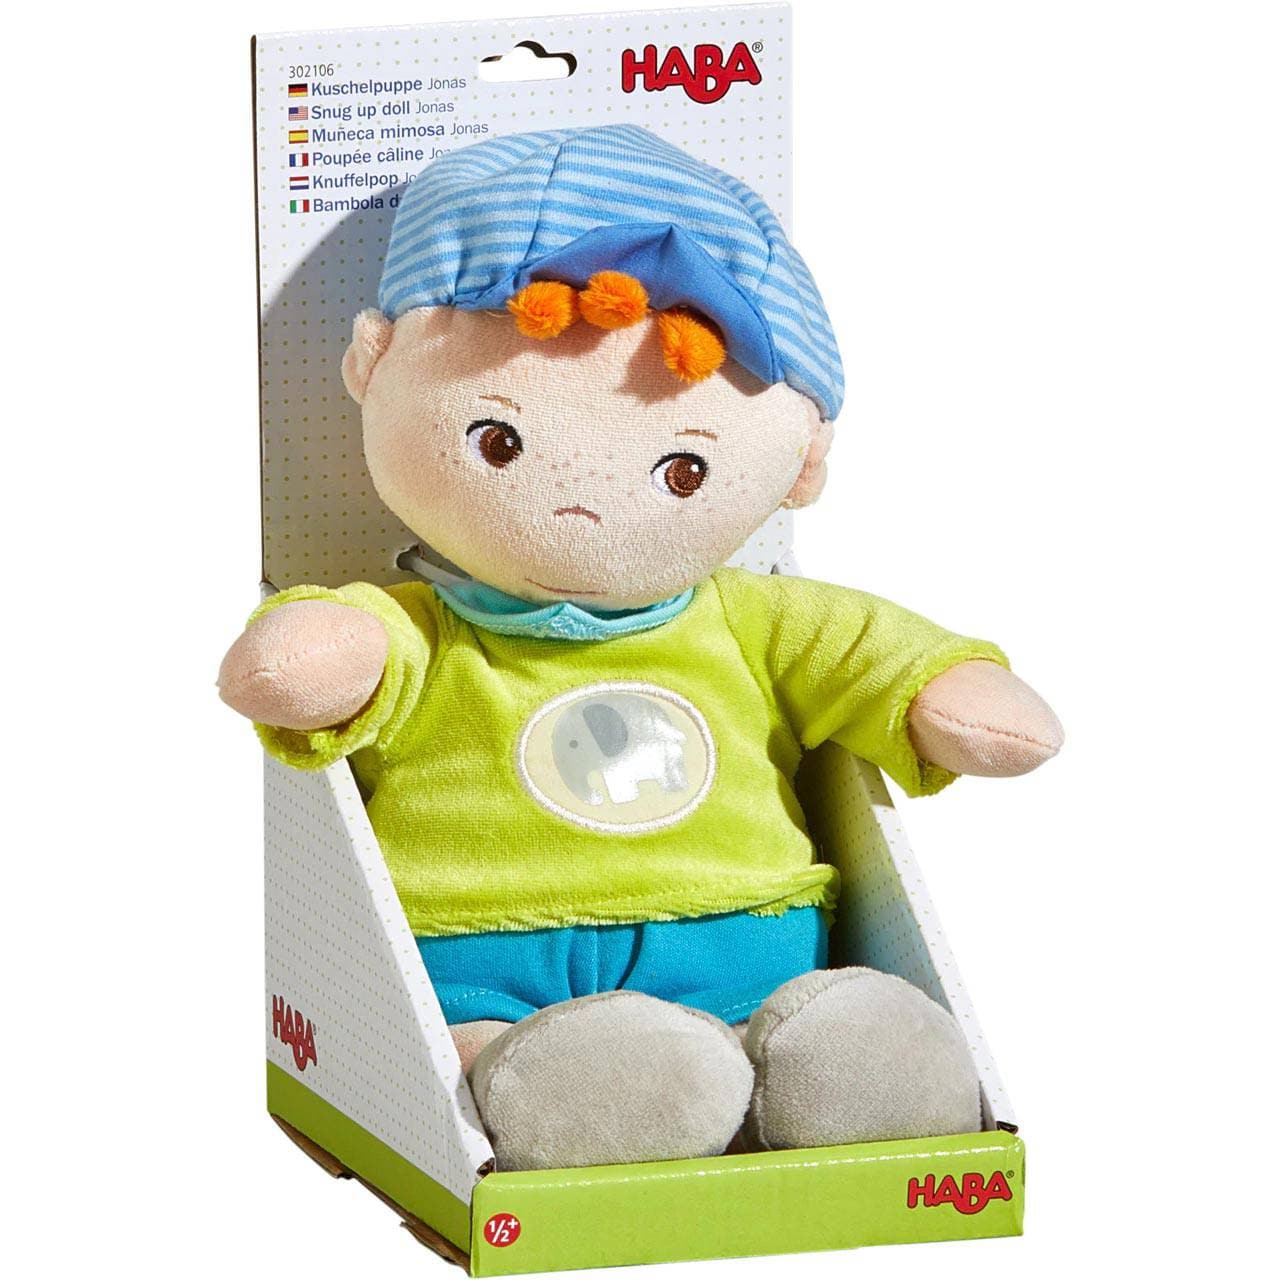 Snug Up Doll Jonas Soft Baby Doll | USA